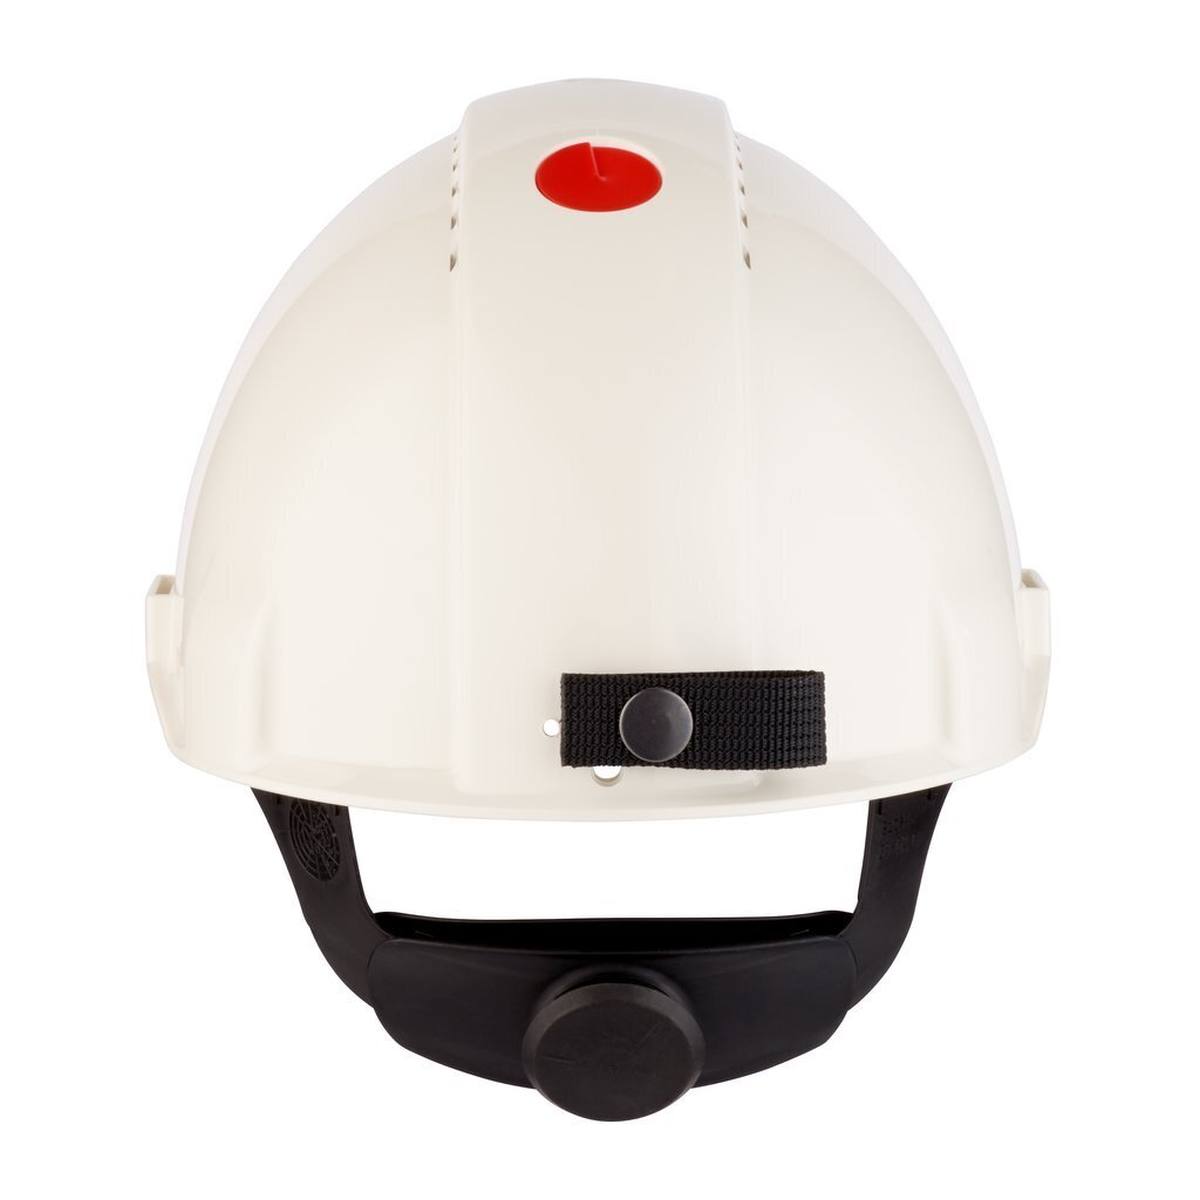 3M G3000 safety helmet G3000NUV-10-VI in white, uvicator, ratchet fastener, ventilated, plastic sweatband, lamp holder